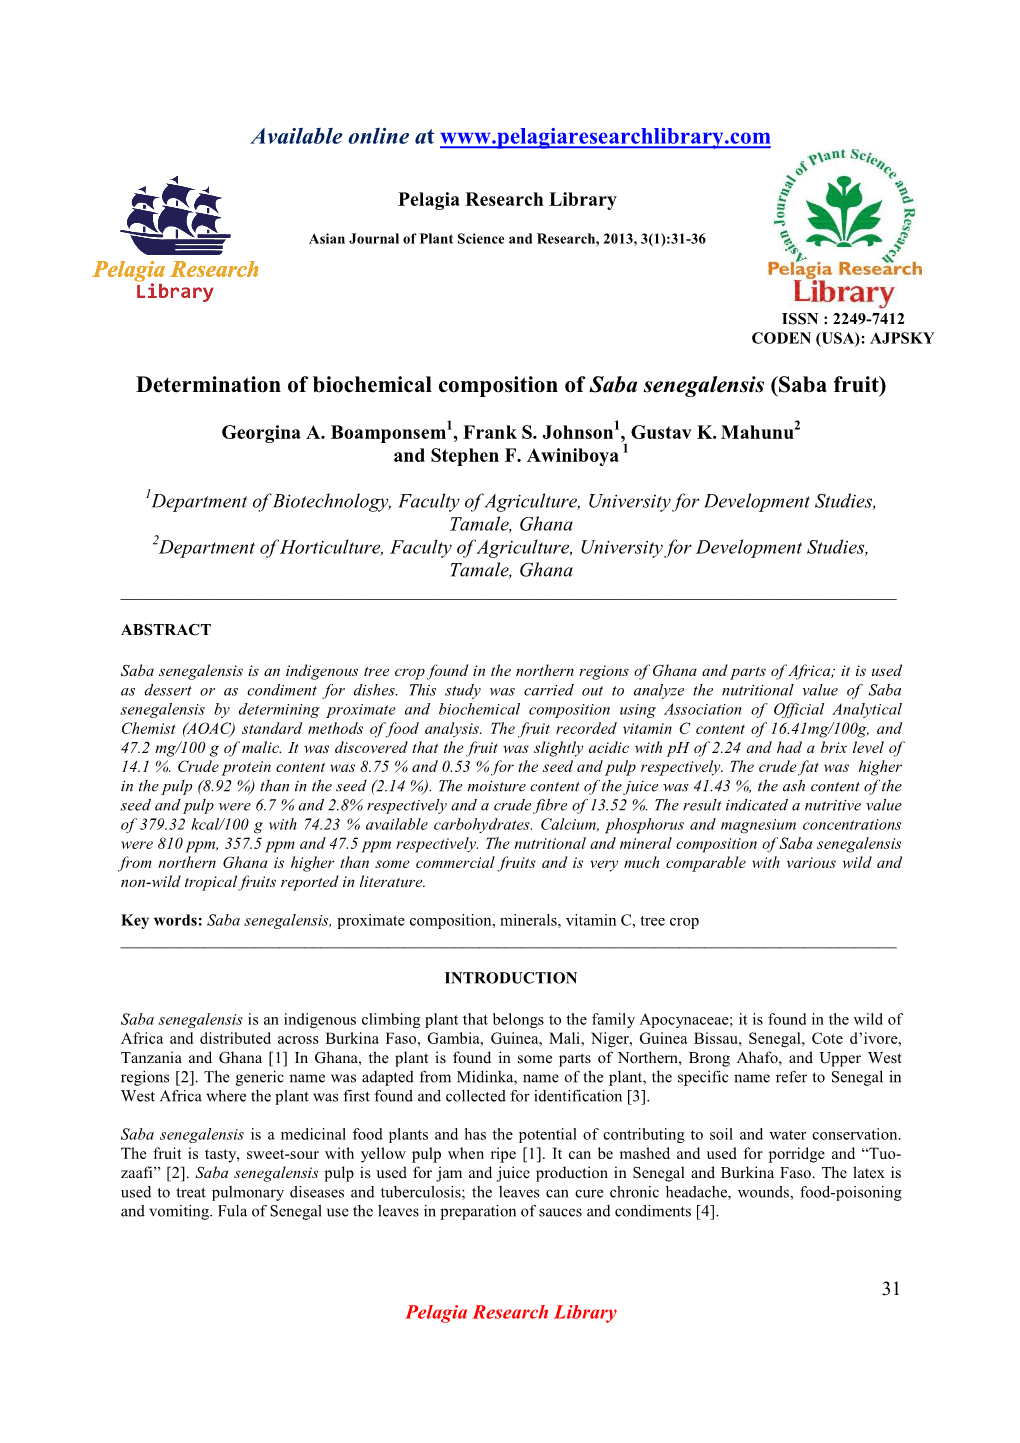 Determination of Biochemical Composition of Saba Senegalensis (Saba Fruit)